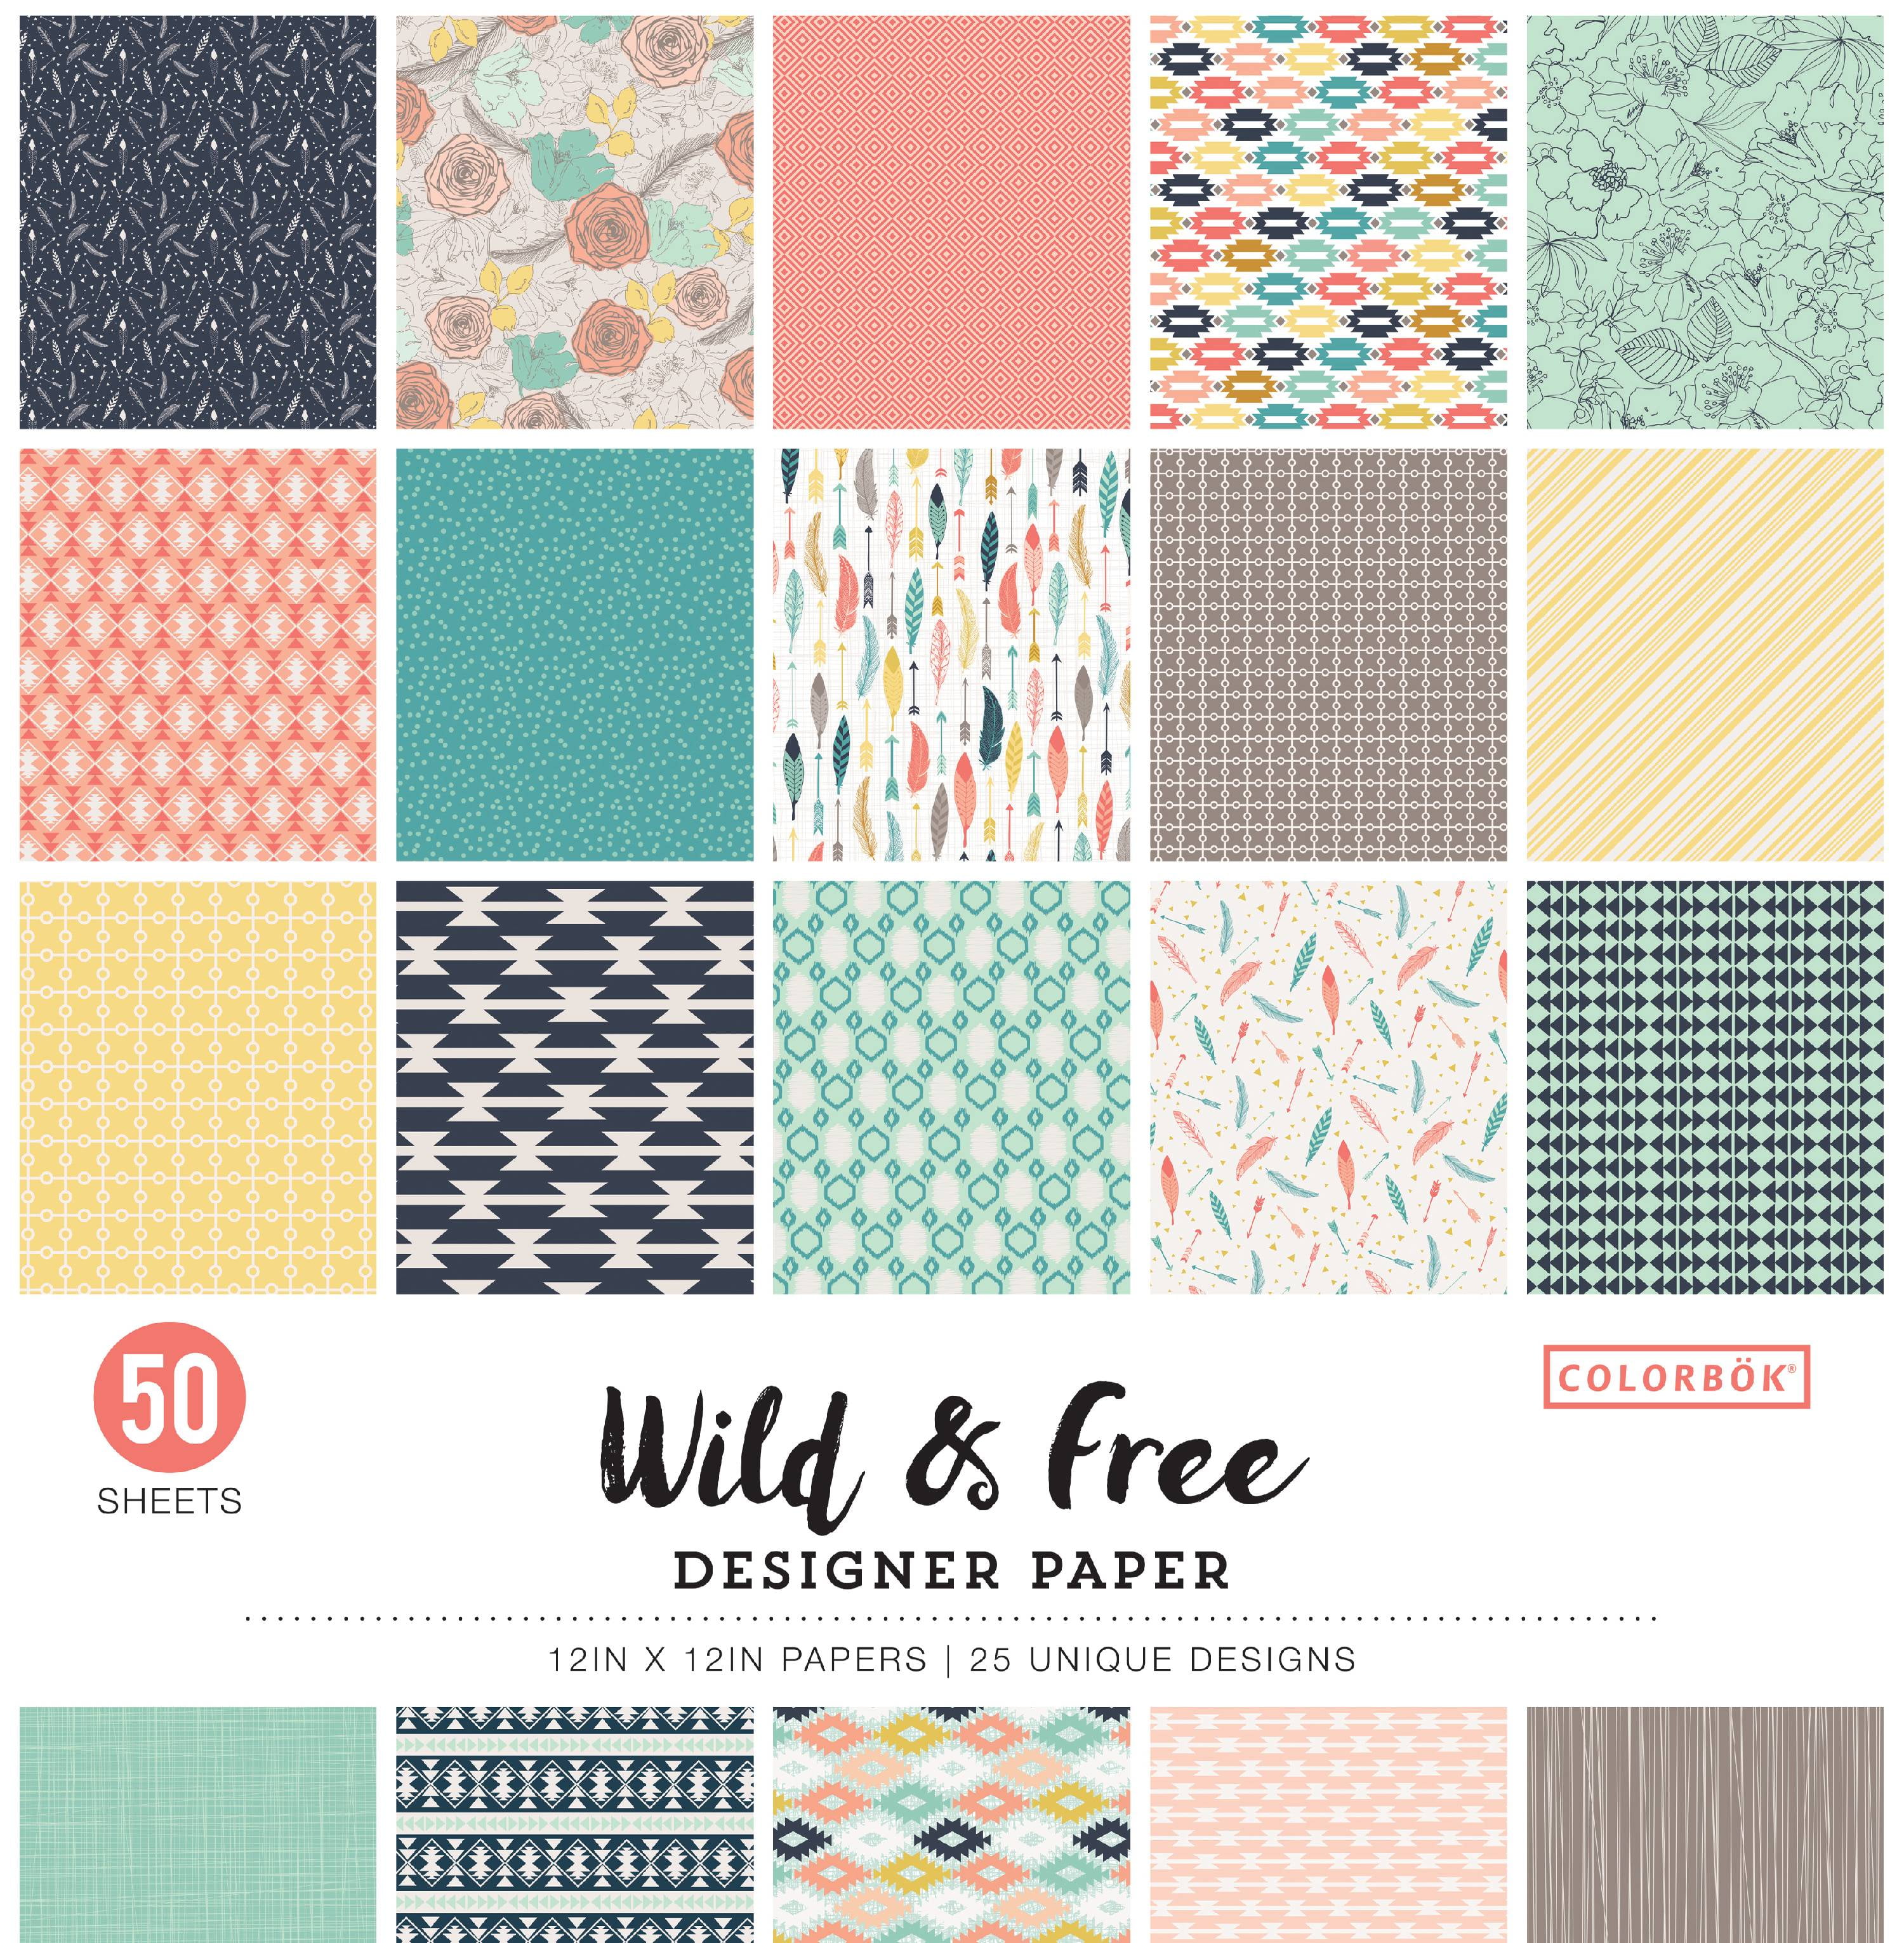 Colorbk Multicolor Wild & Free Designer Paper, 50 Sheet